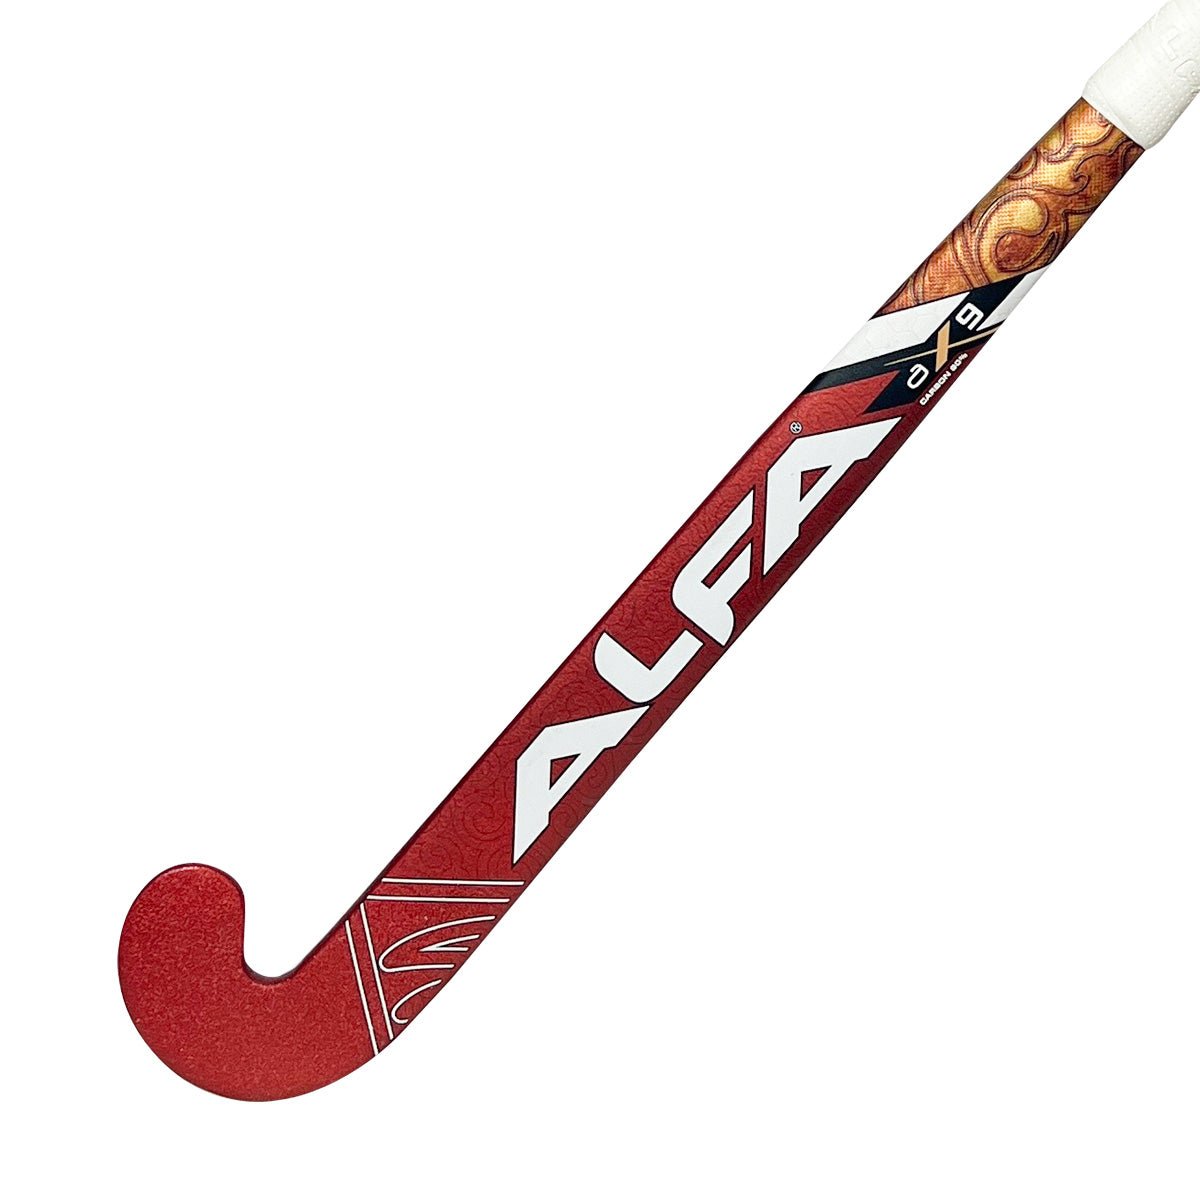 Alfa AX-9 LB - Just Hockey